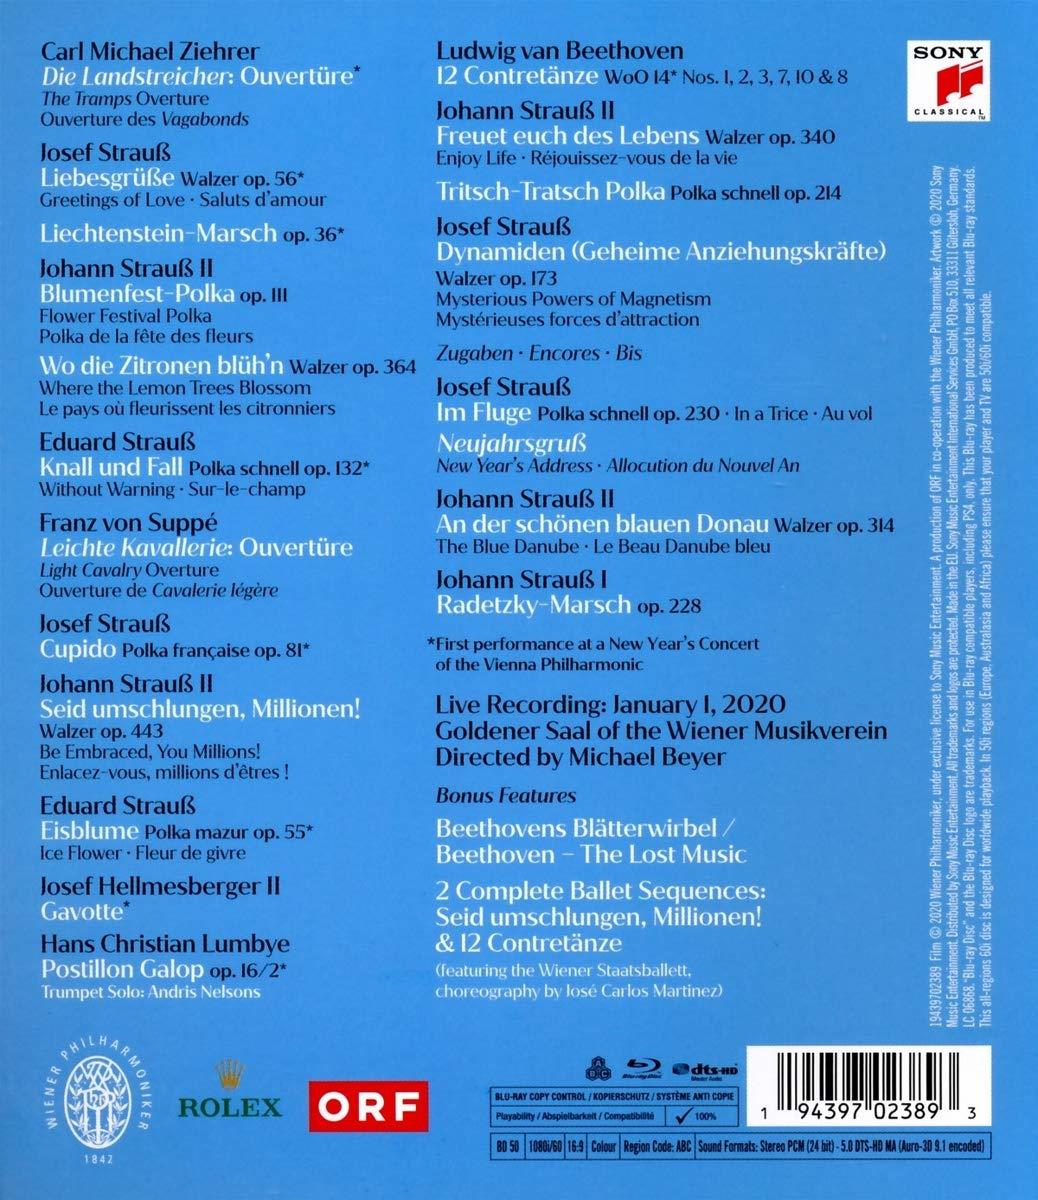 - 2020 Philharmoniker Neujahrskonzert Wiener (Blu-ray) -